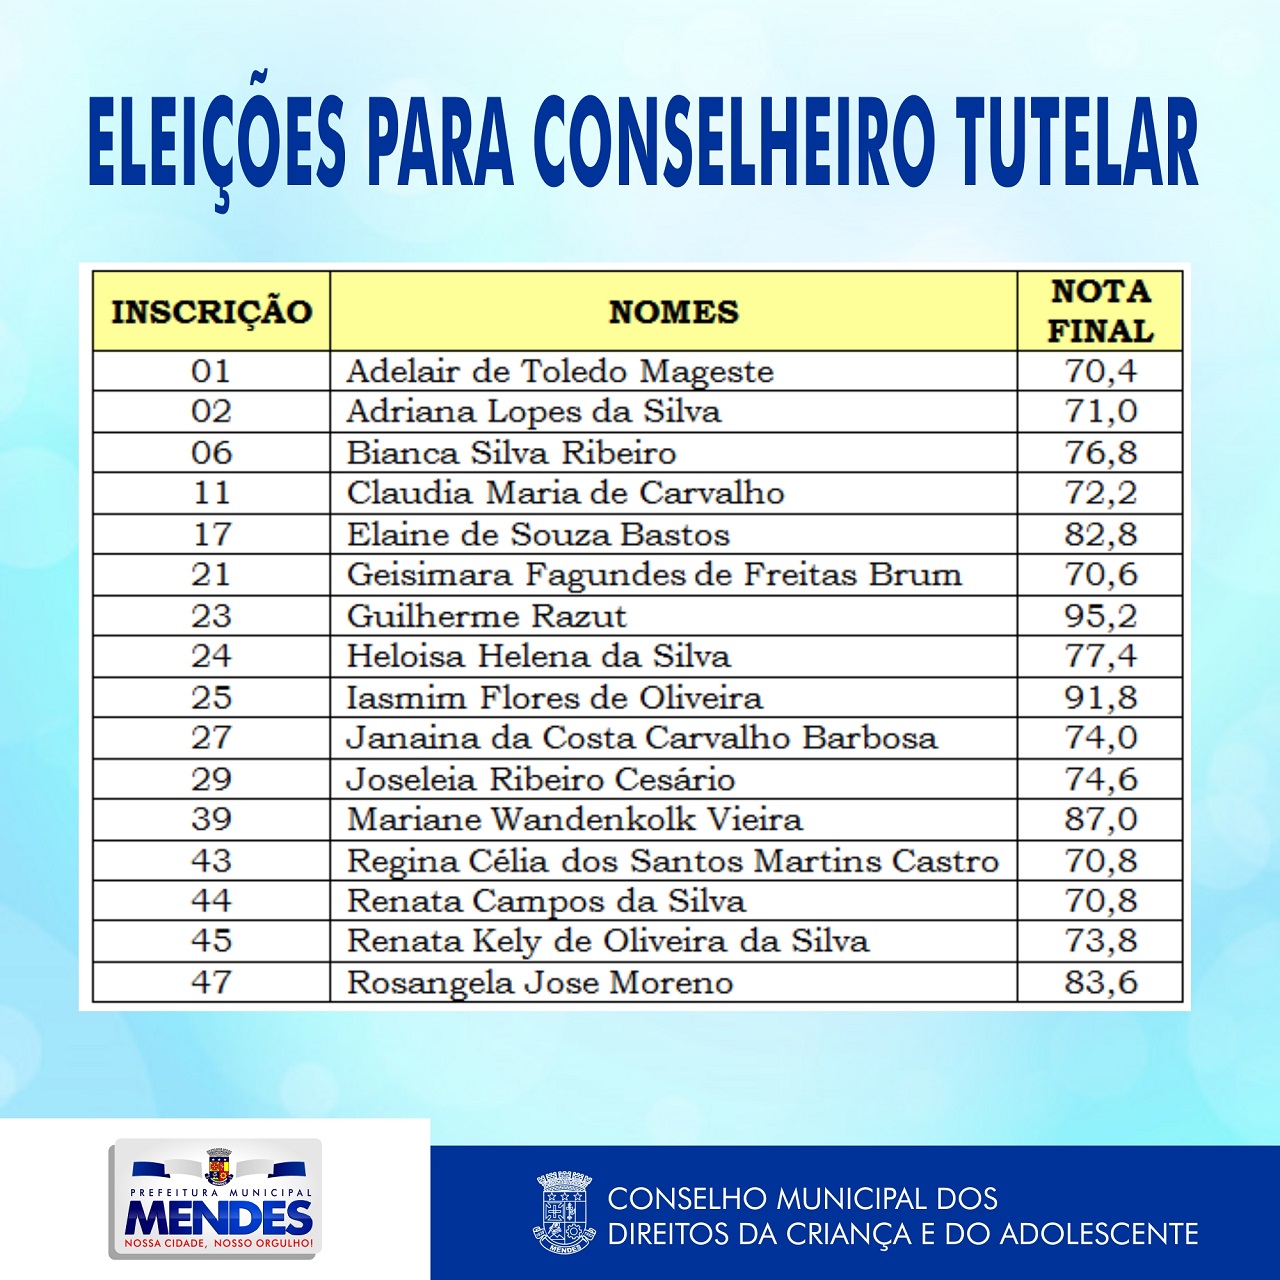 eleicao_conselheiros_tutelar_2019_1.jpg